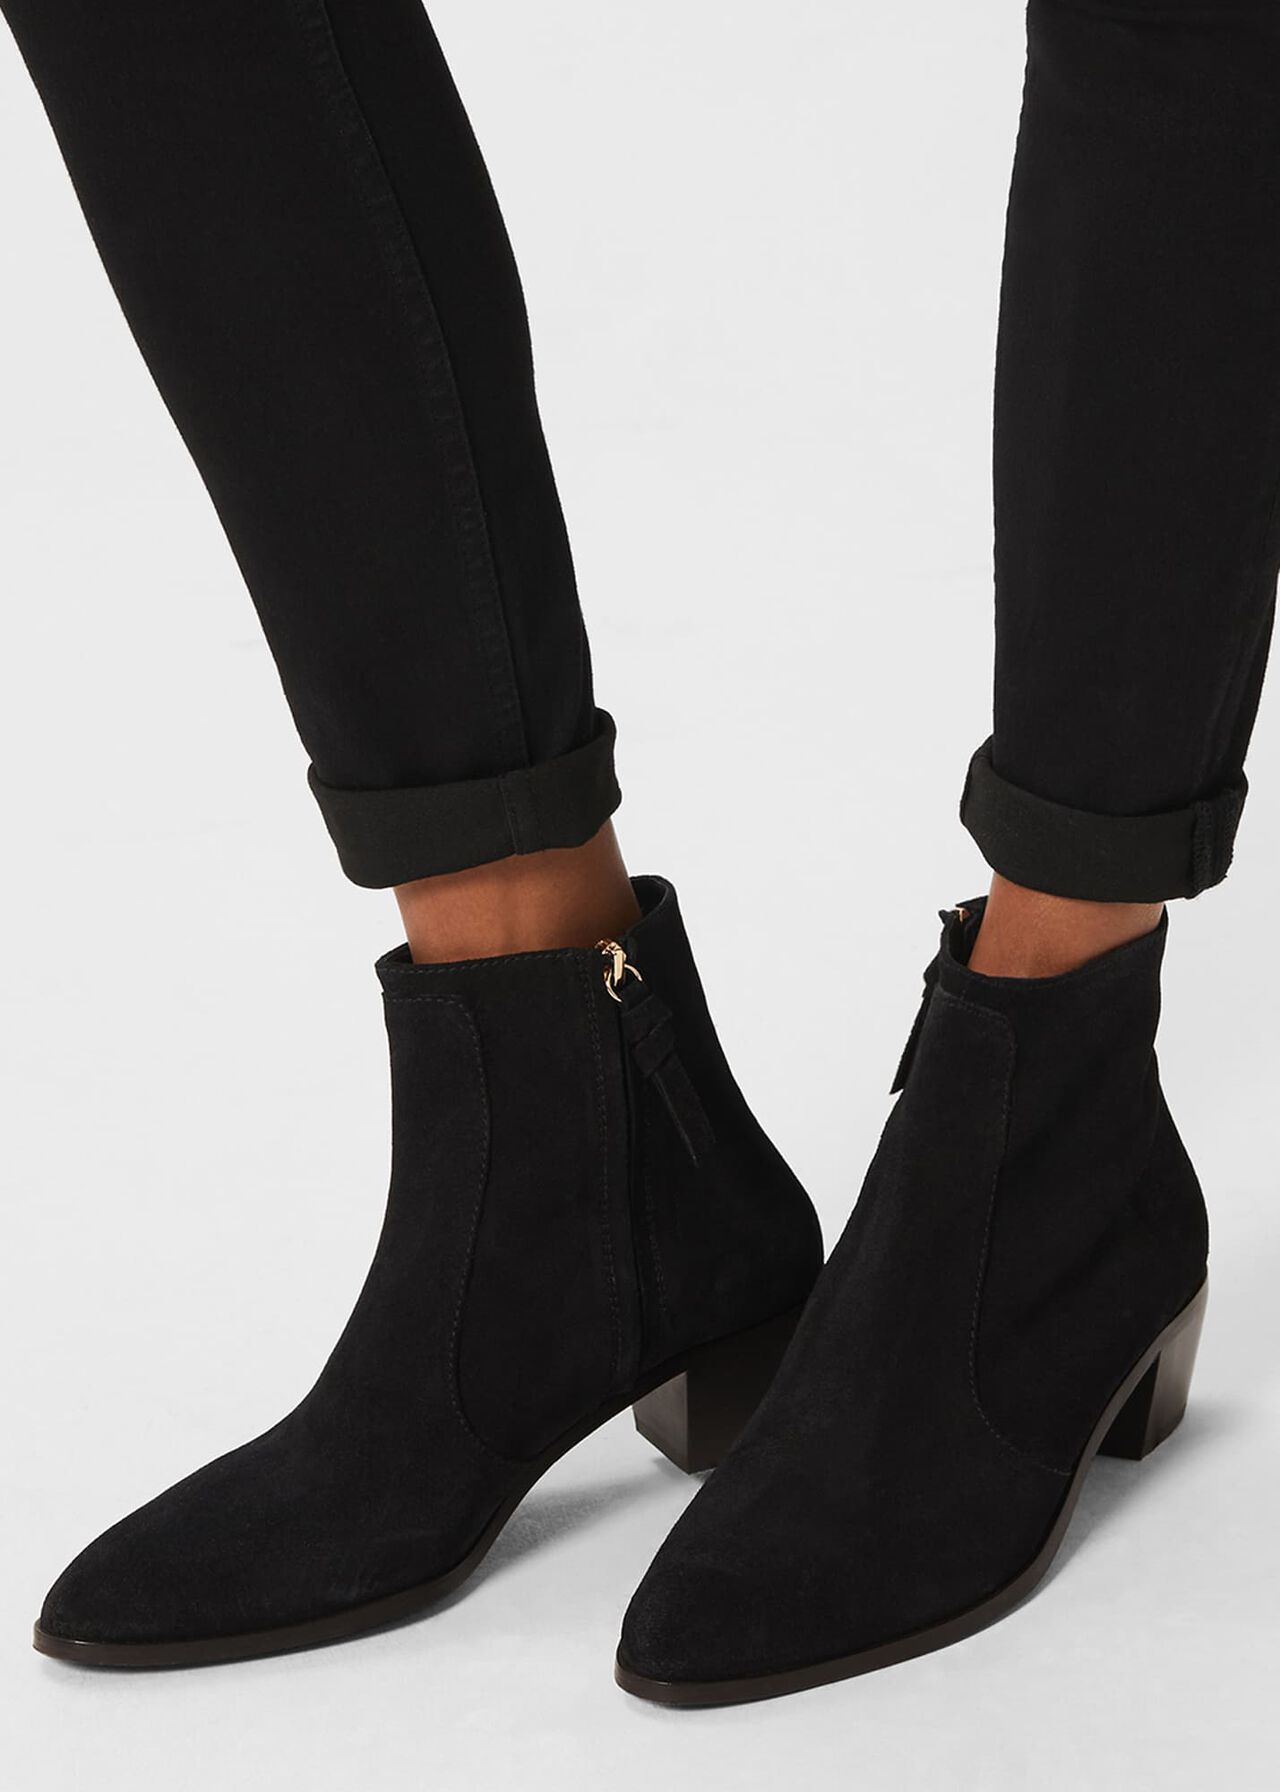 Shona Ankle Boots, Black, hi-res